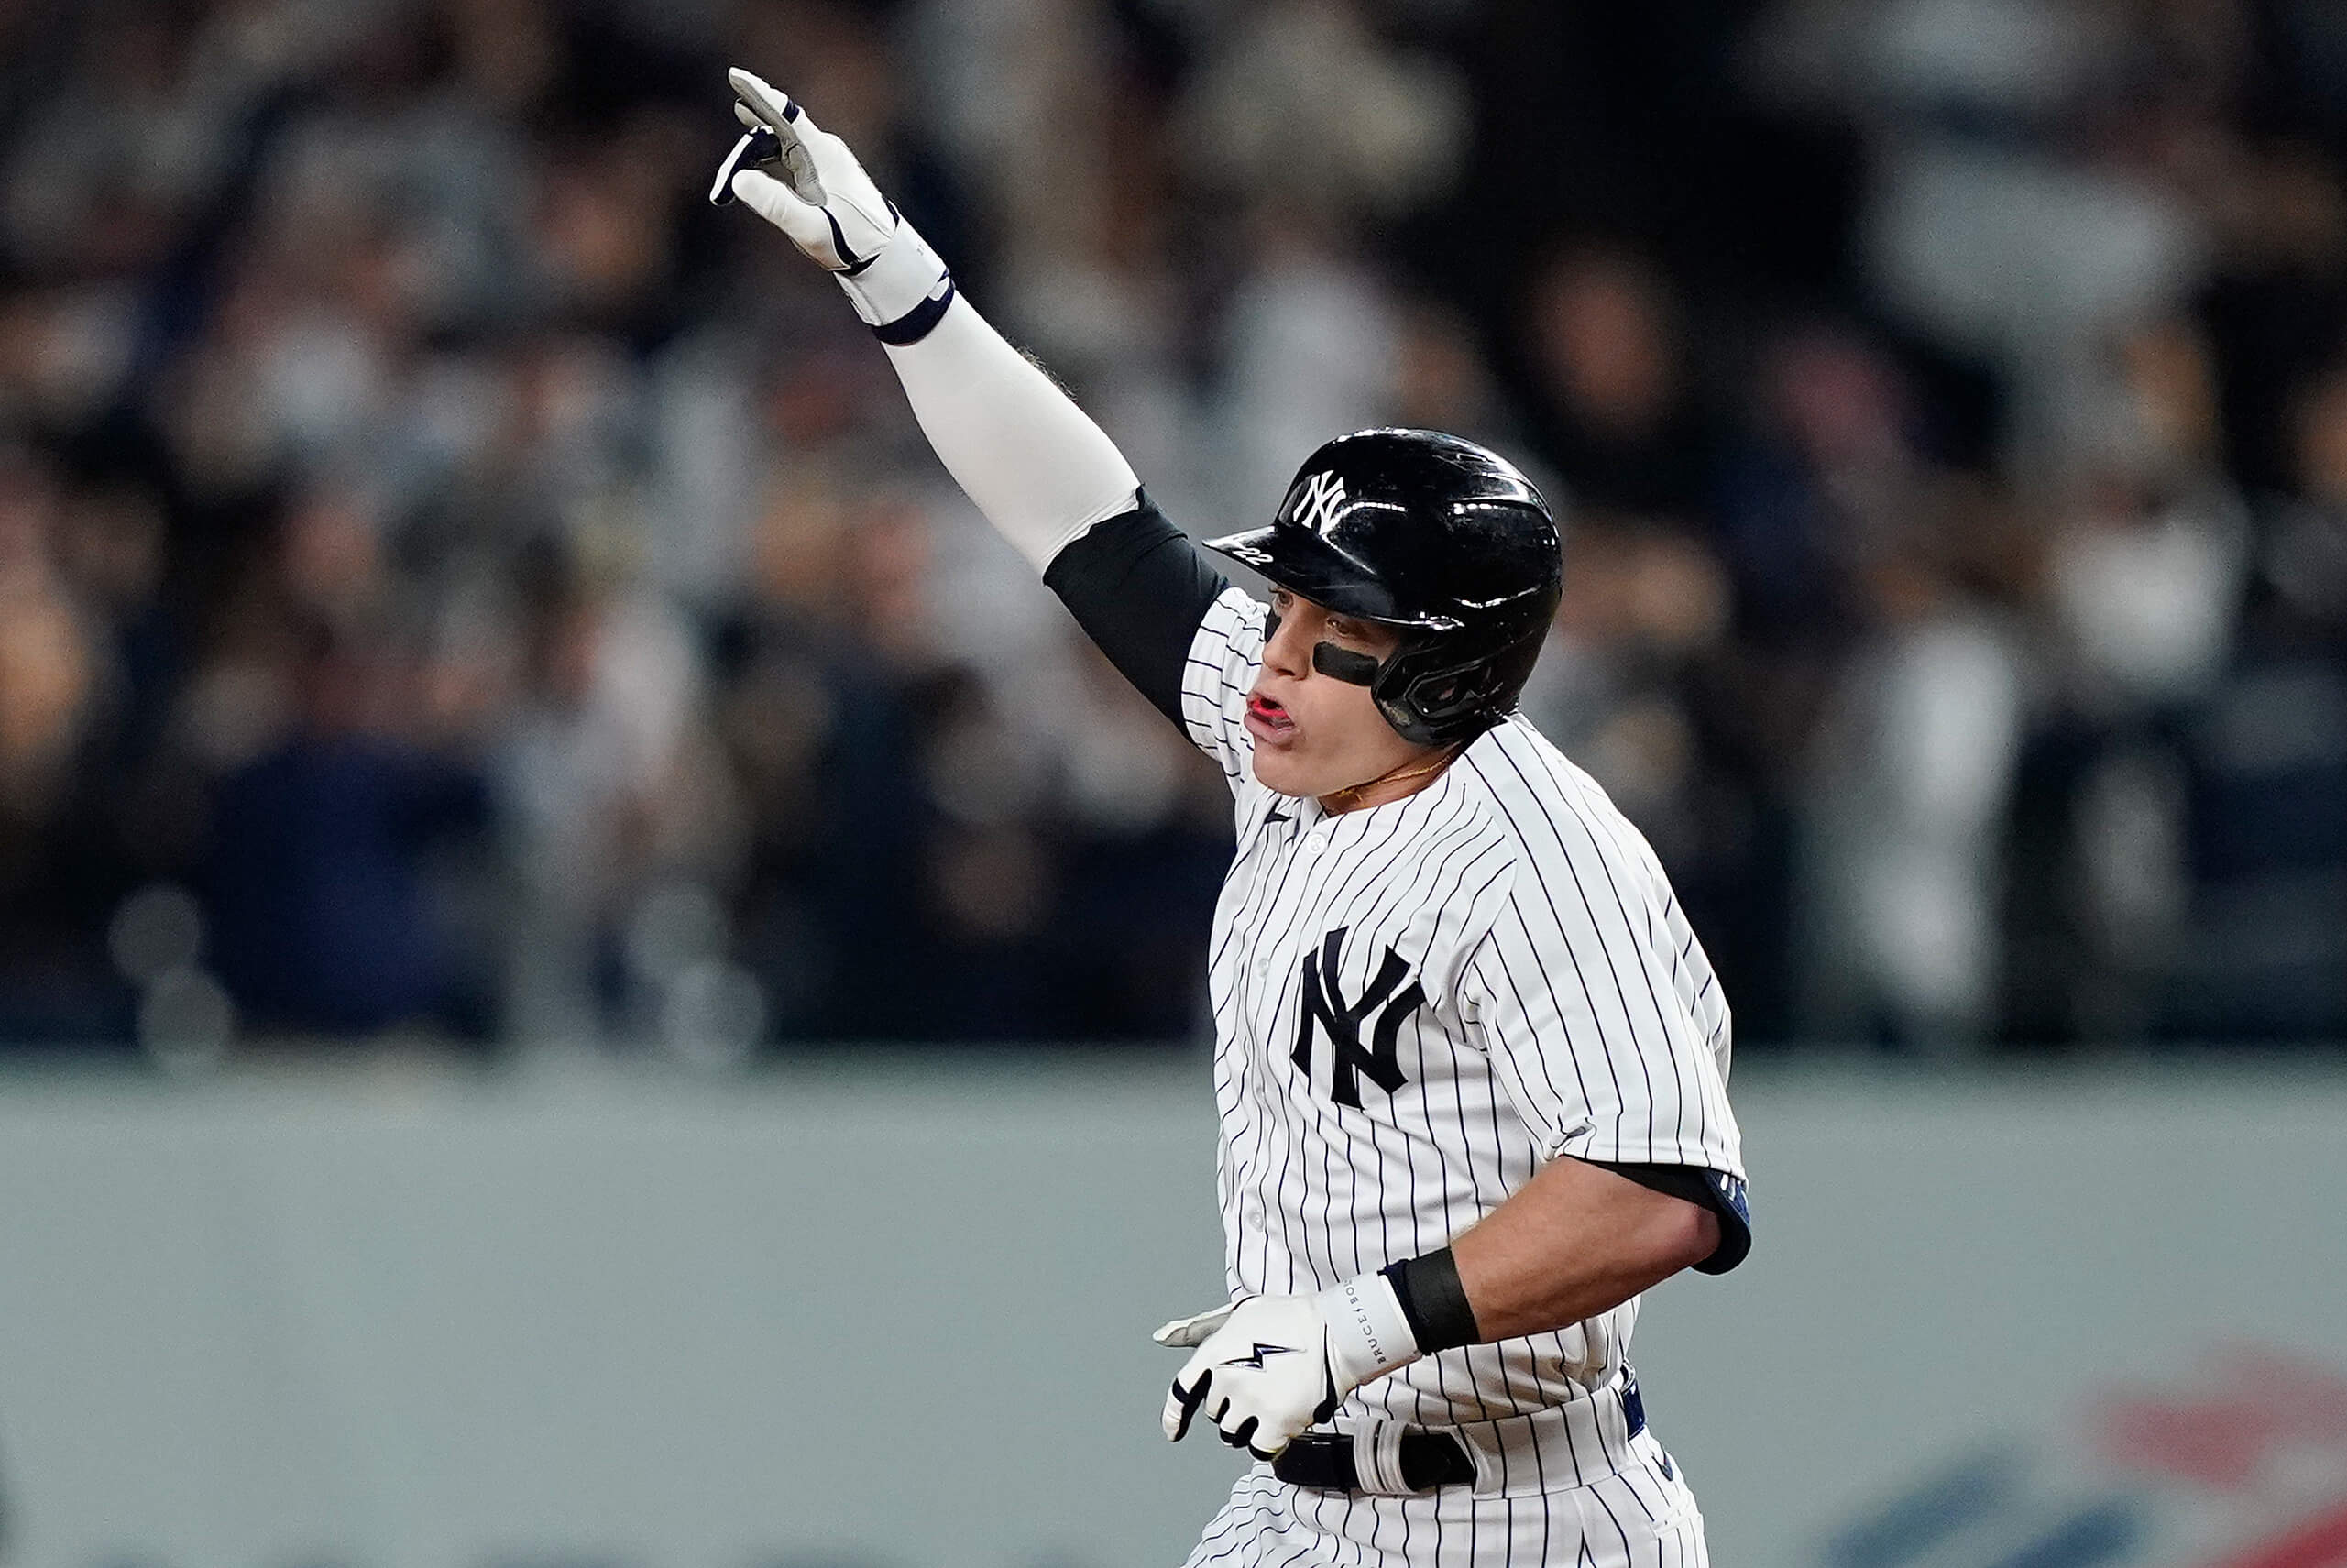 Yankees injury update: Harrison Bader hopes to swing again 'really